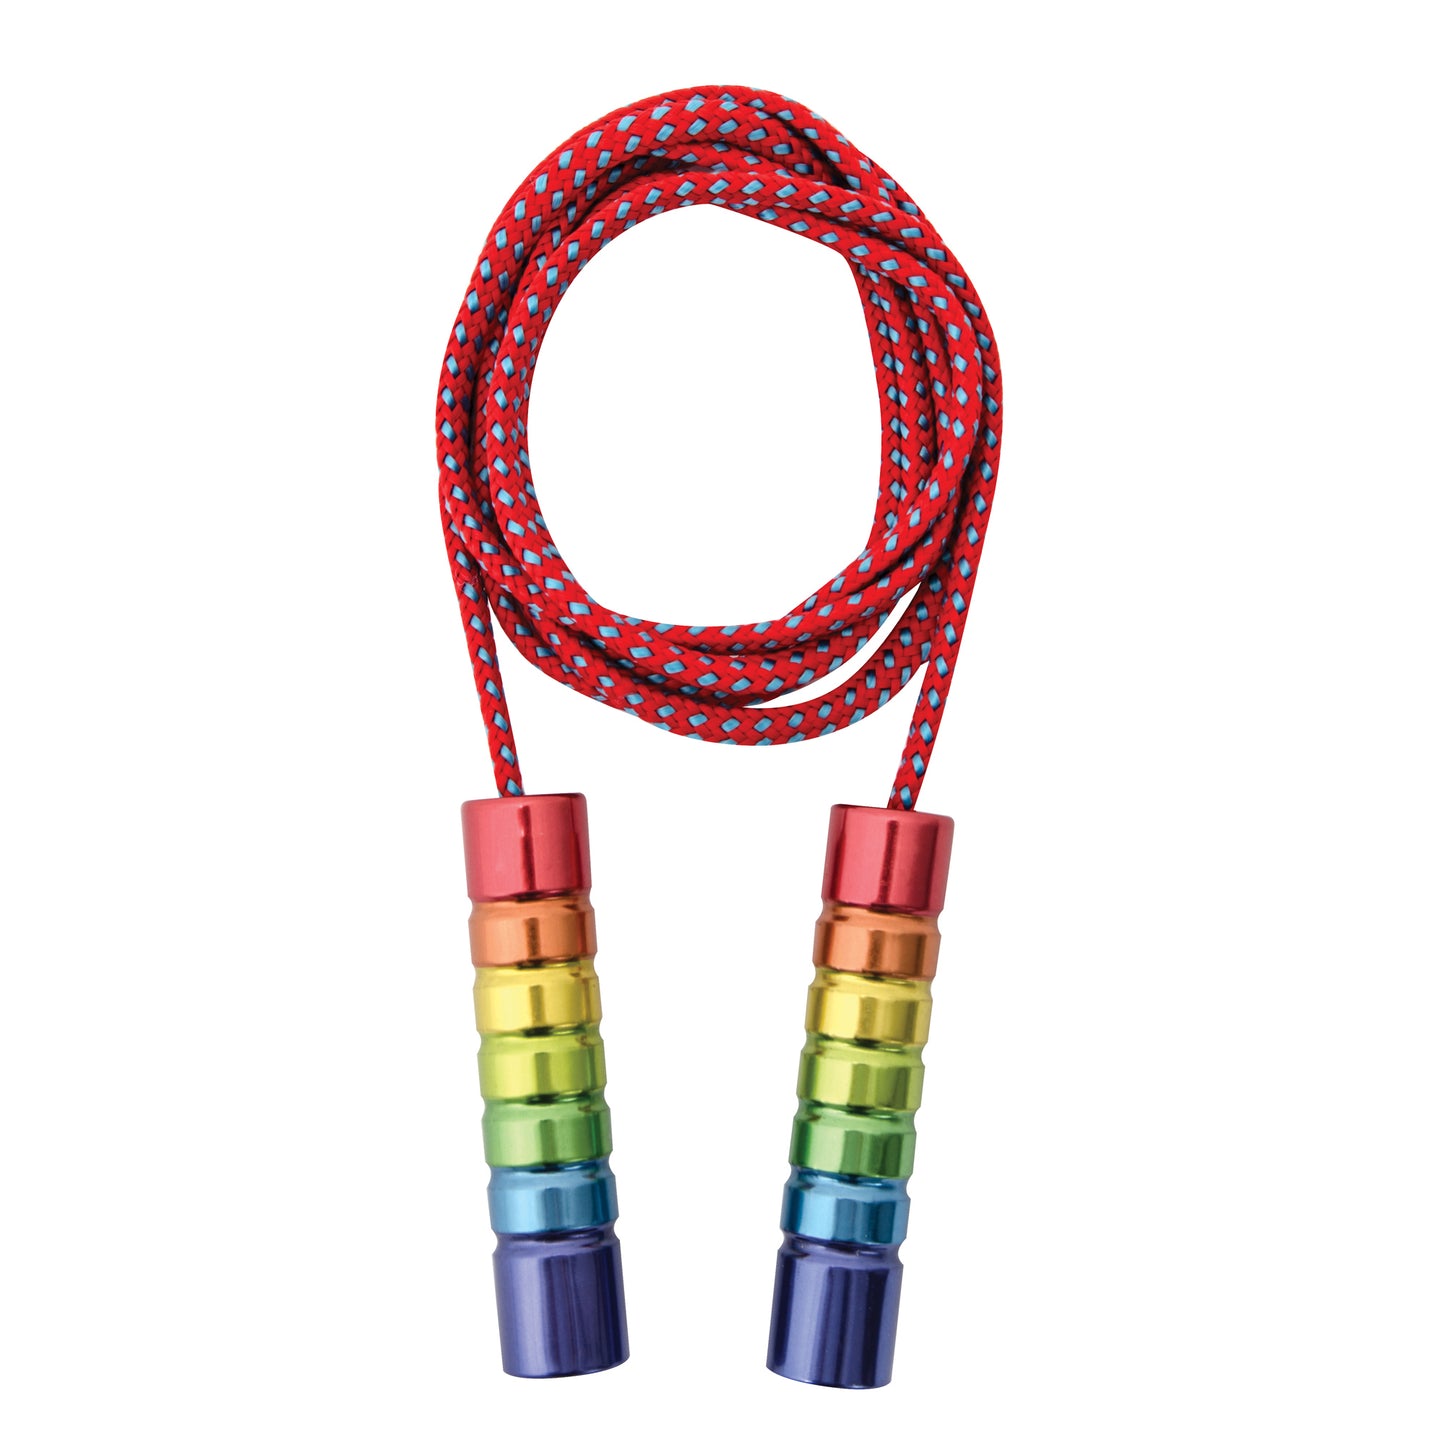 Rainbow Jump Rope  - Doodlebug's Children's Boutique